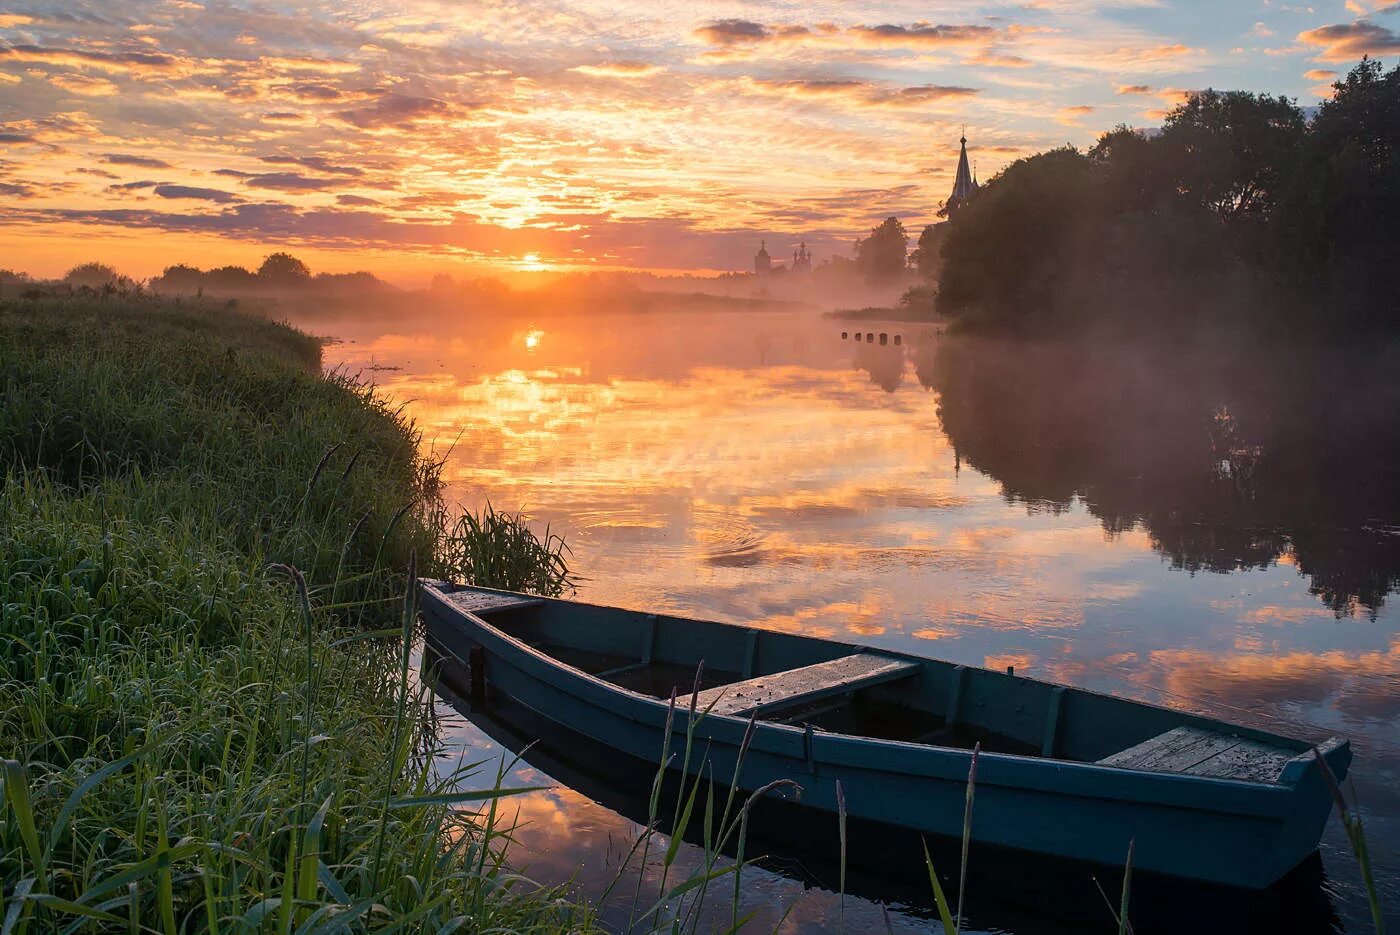 Над рекой над городом словами. Рассвет на реке. Летнее утро на реке. Лодка на реке. Закат на реке.